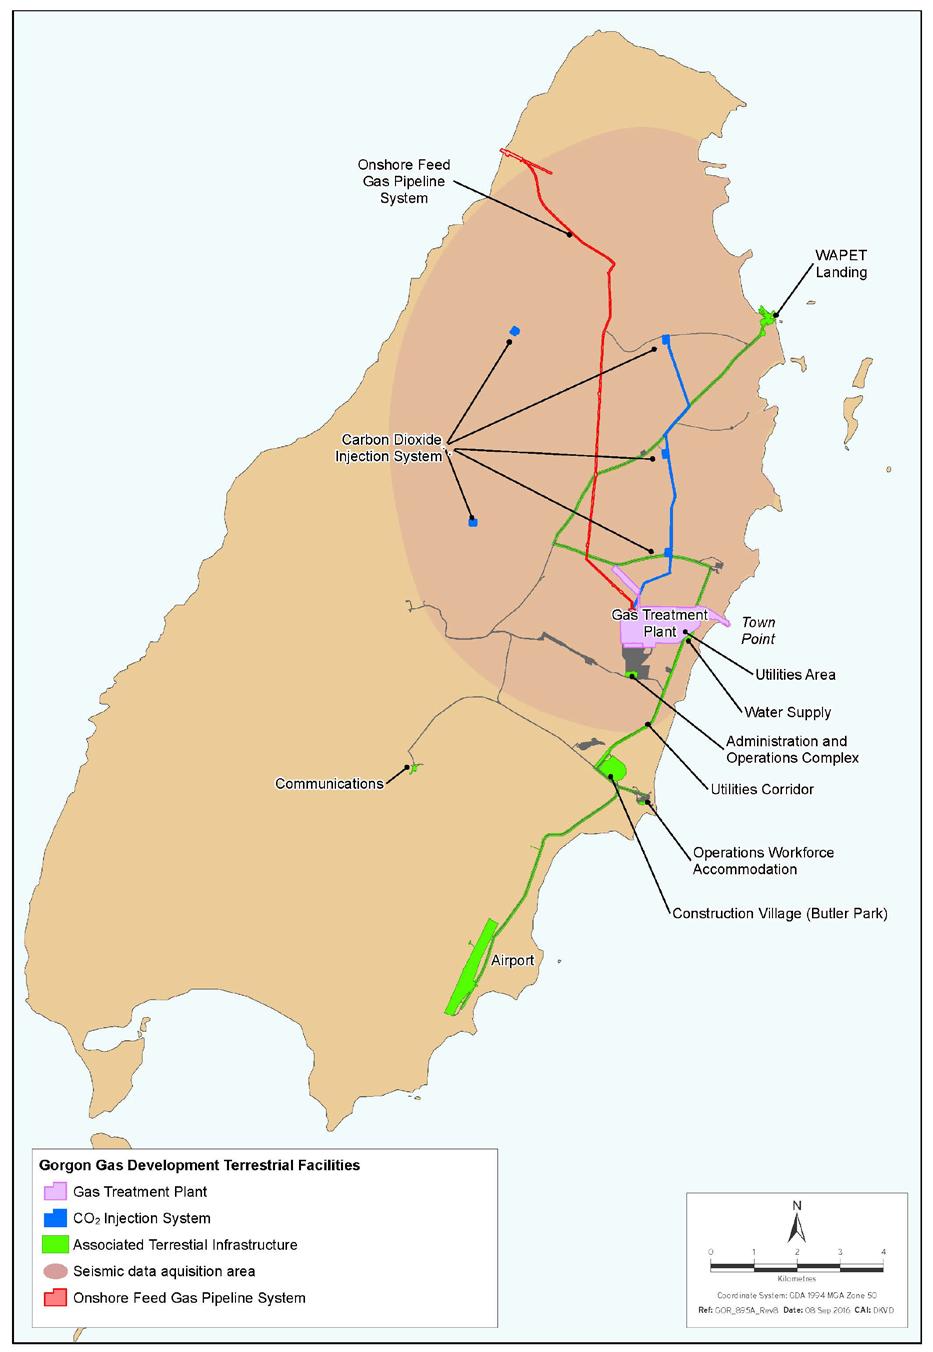 Figure 2-1: Gorgon Gas Development Terrestrial Facilities on